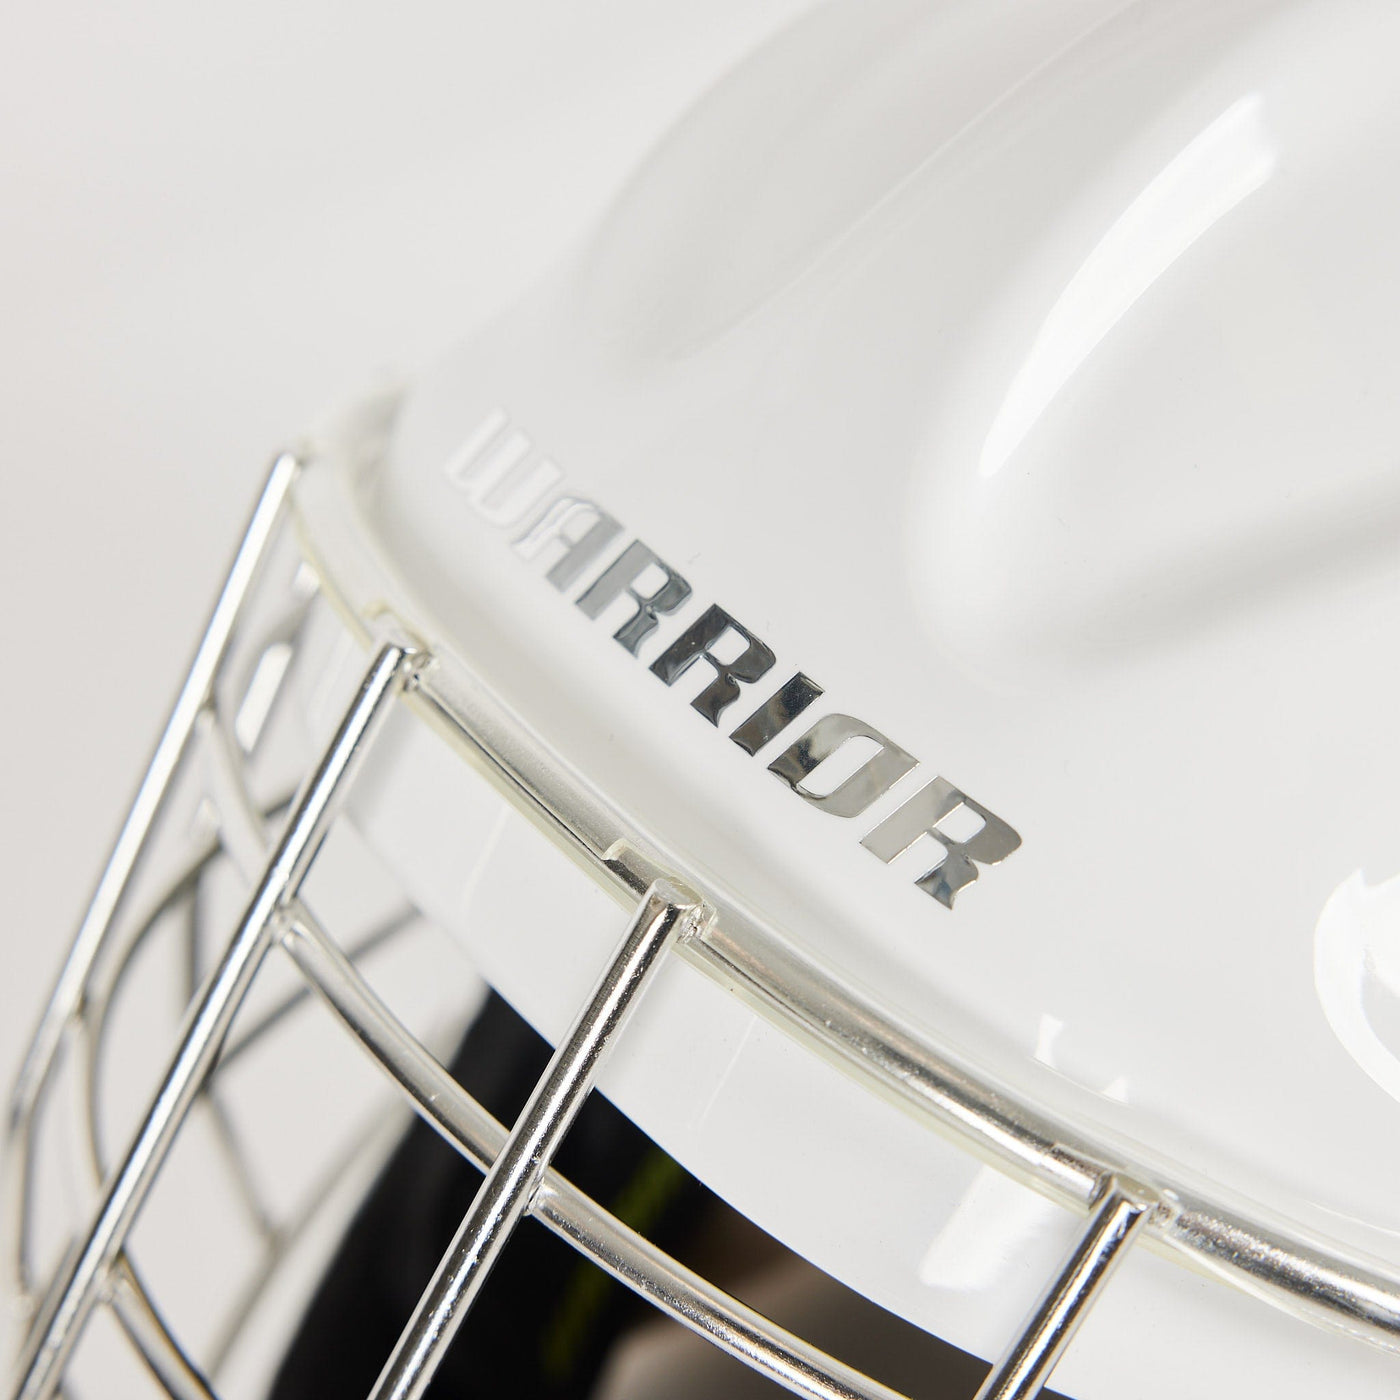 Warrior Ritual F2 Pro Senior Goalie Mask - The Hockey Shop Source For Sports